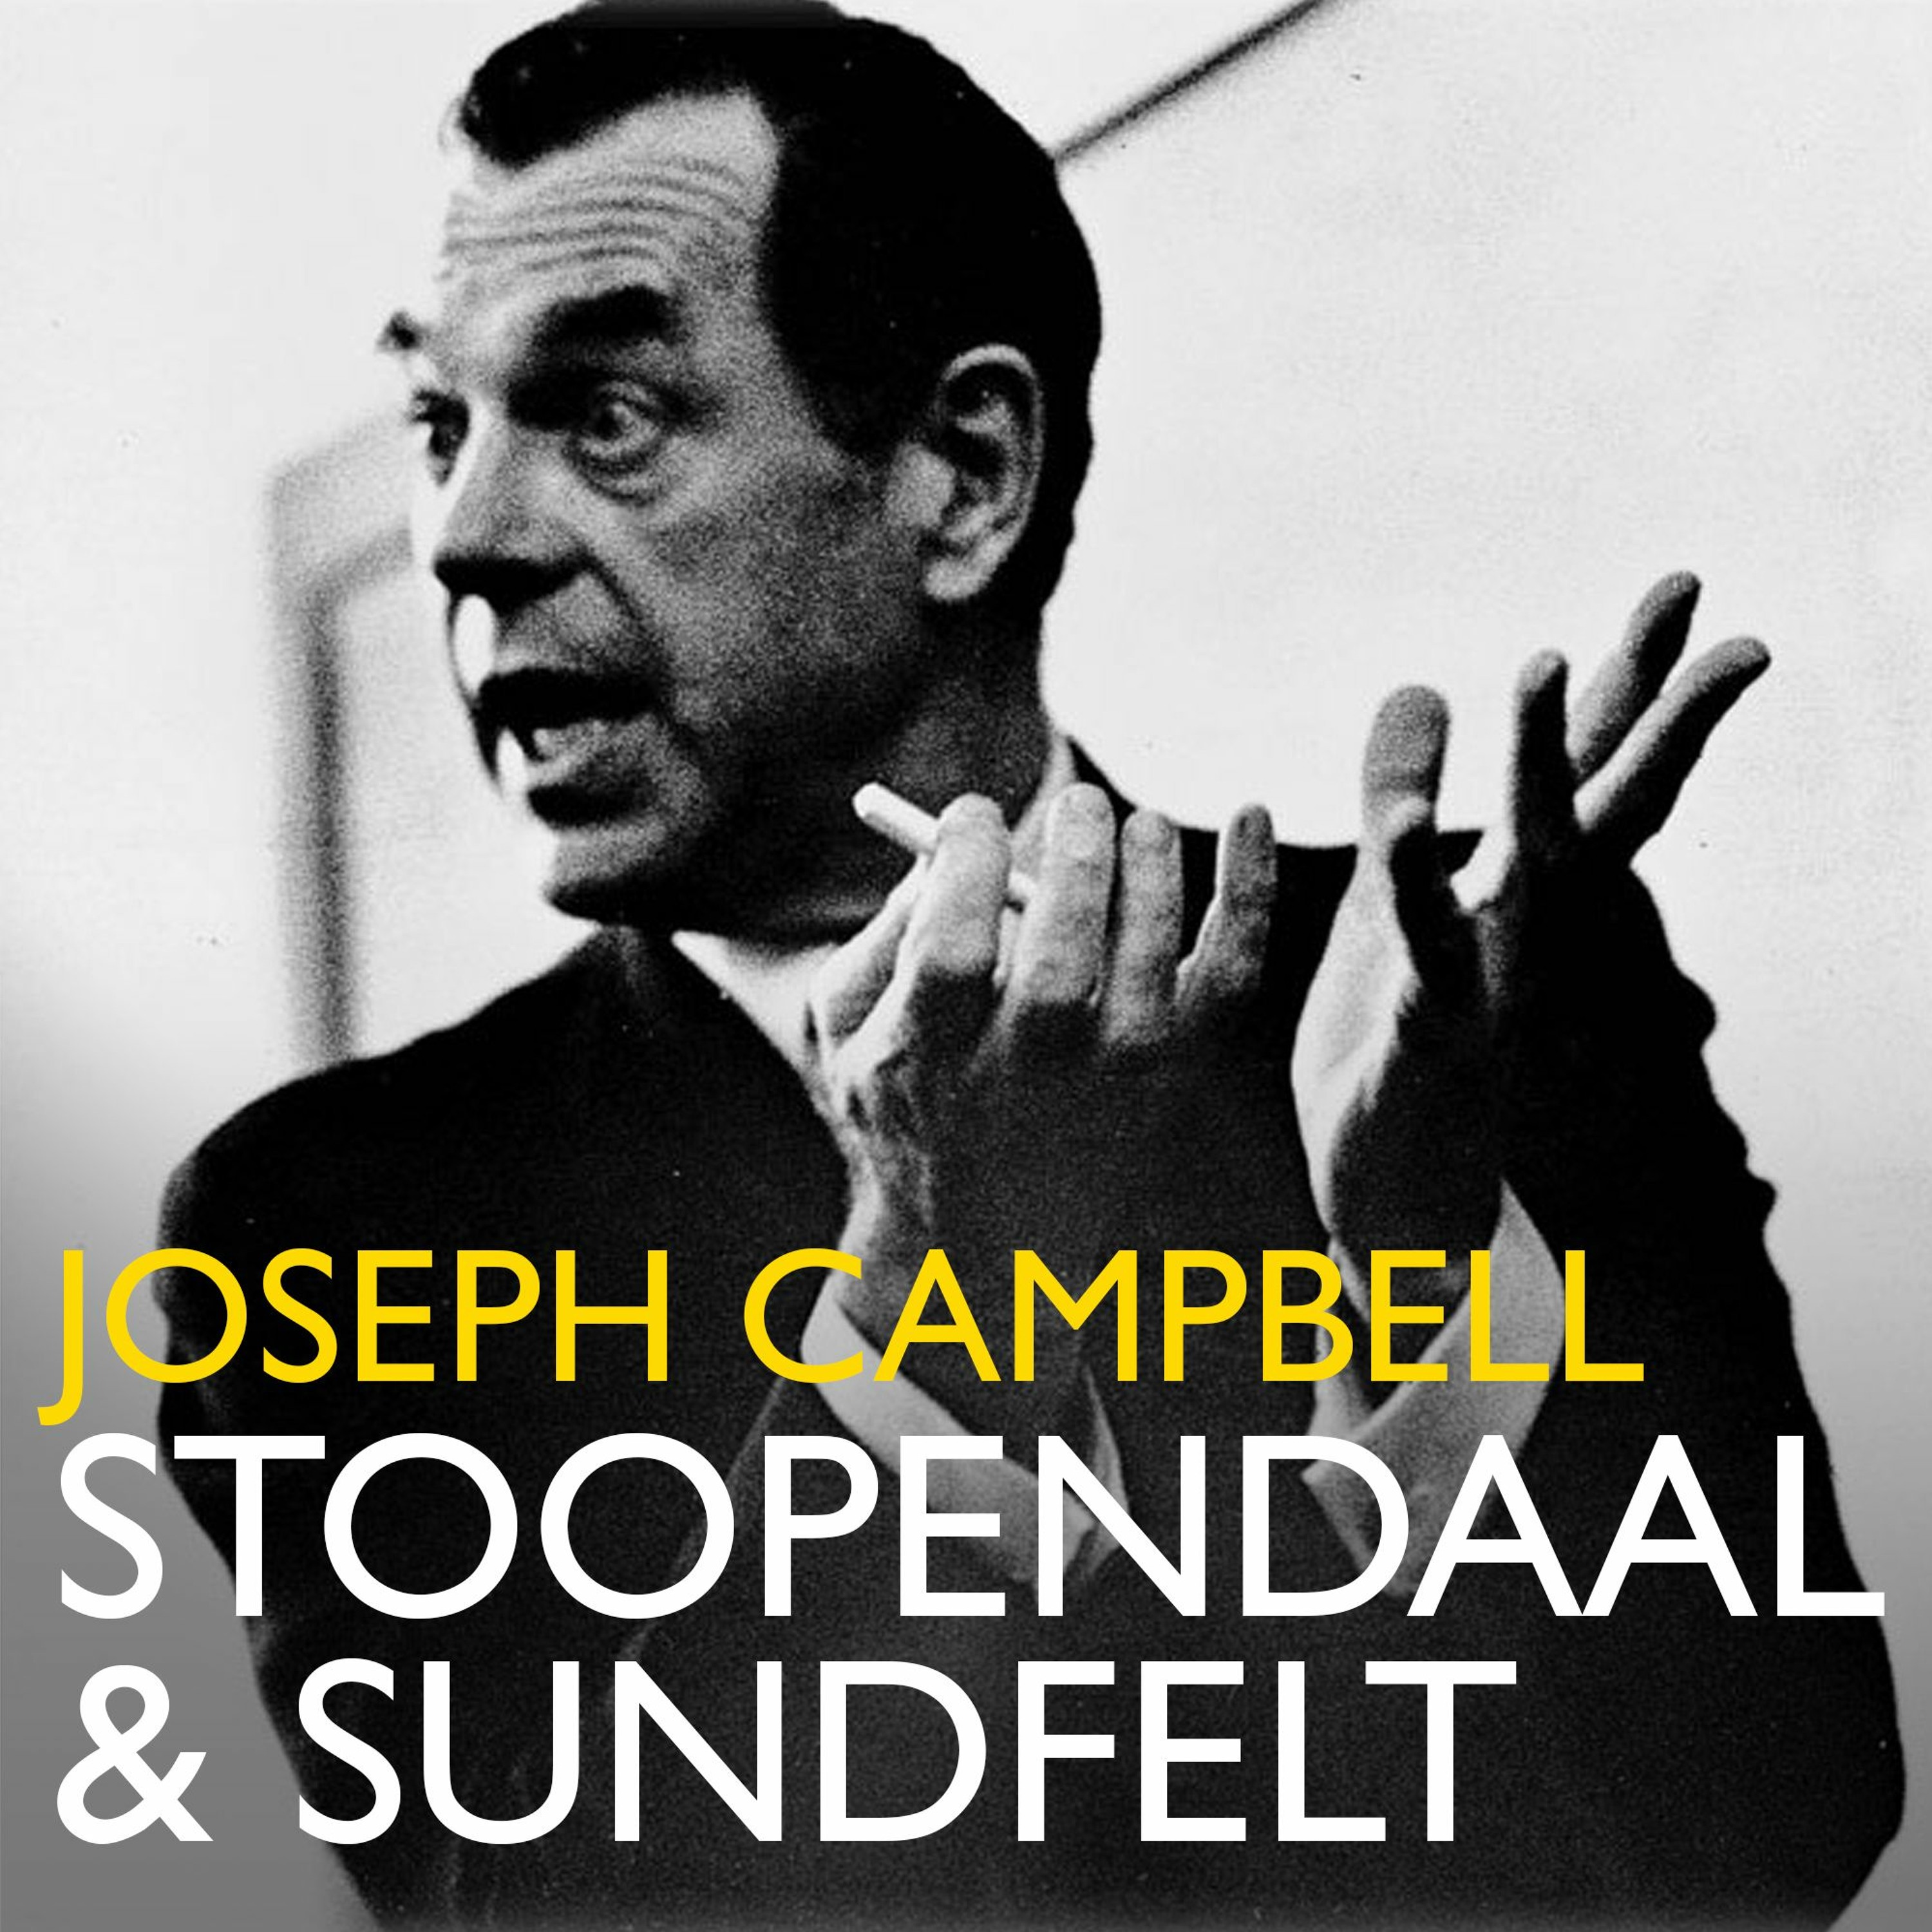 JOSEPH CAMPBELL